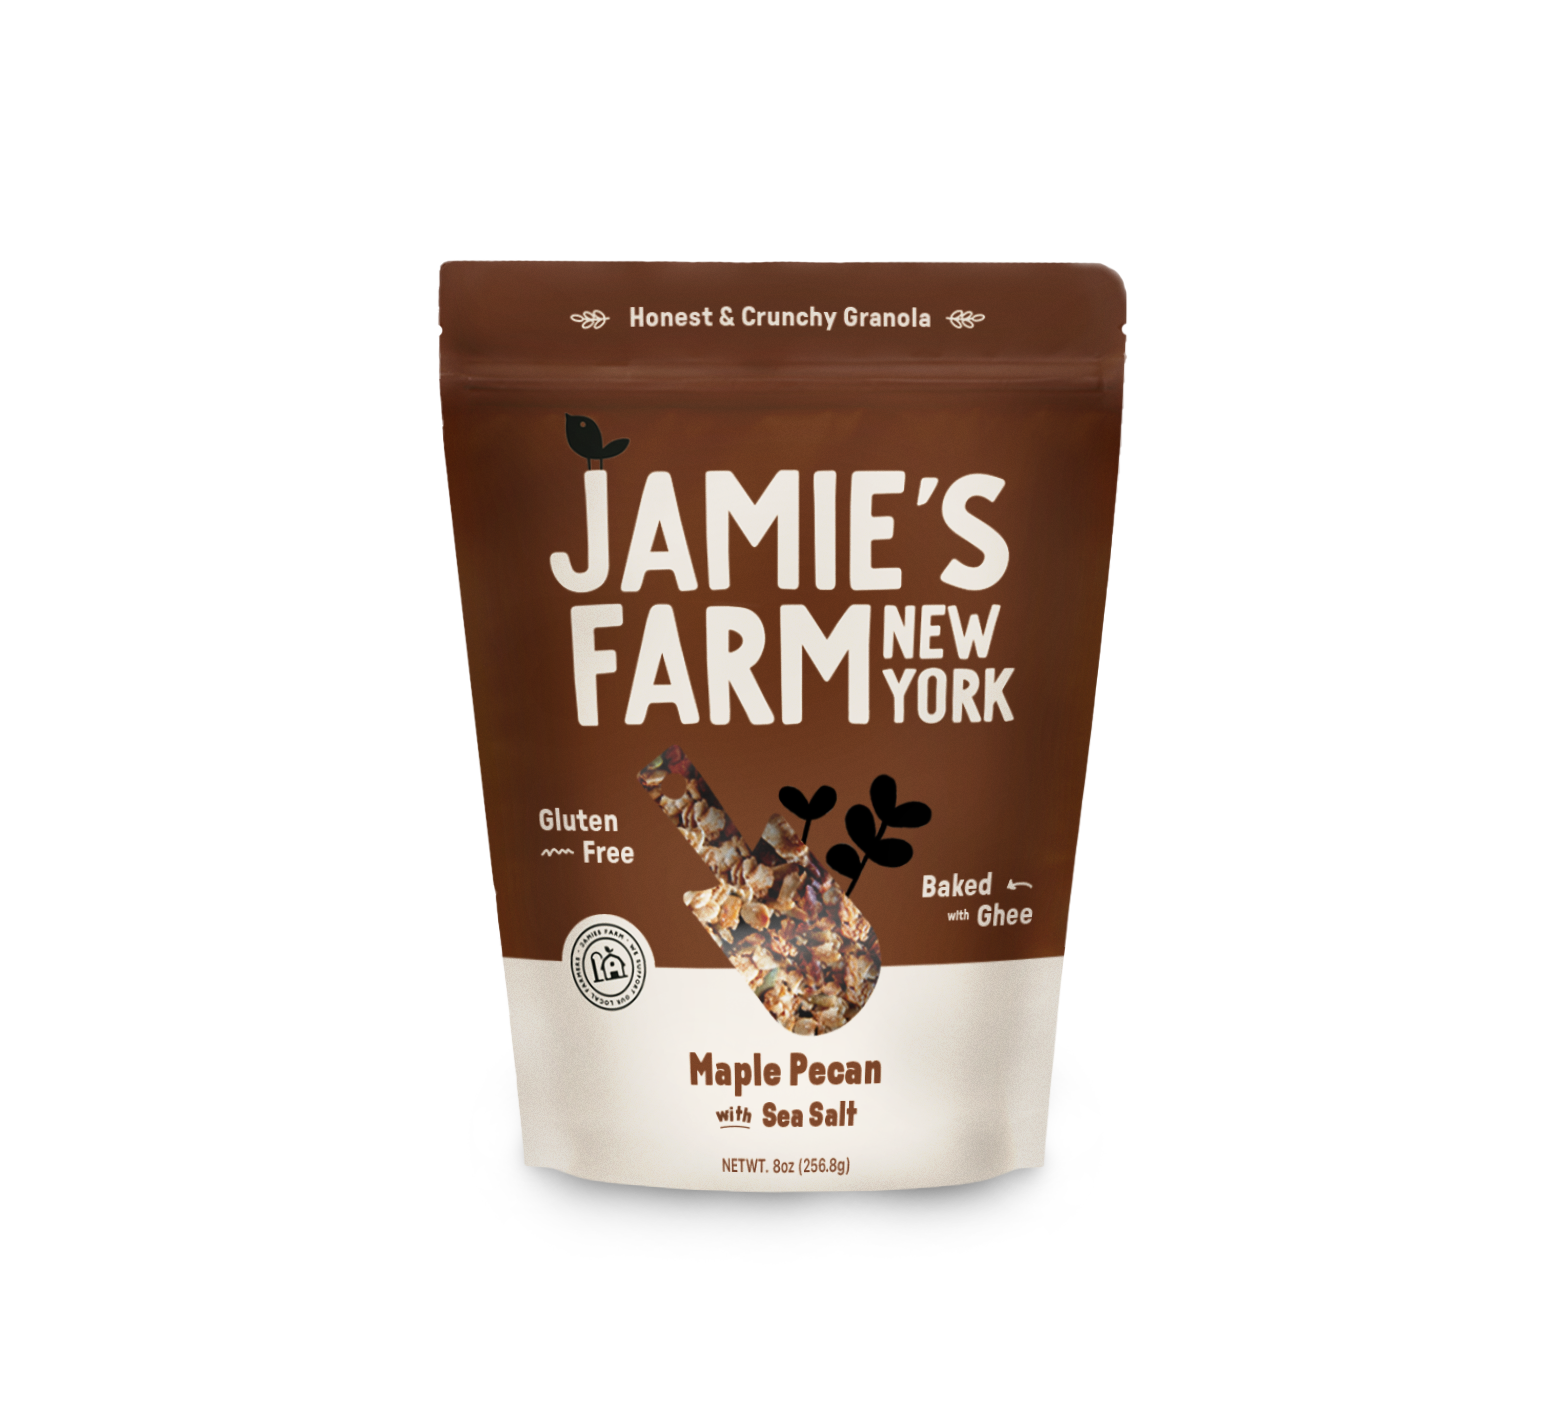 Jamie's Farm New York Maple Pecan Granola with Sea Salt